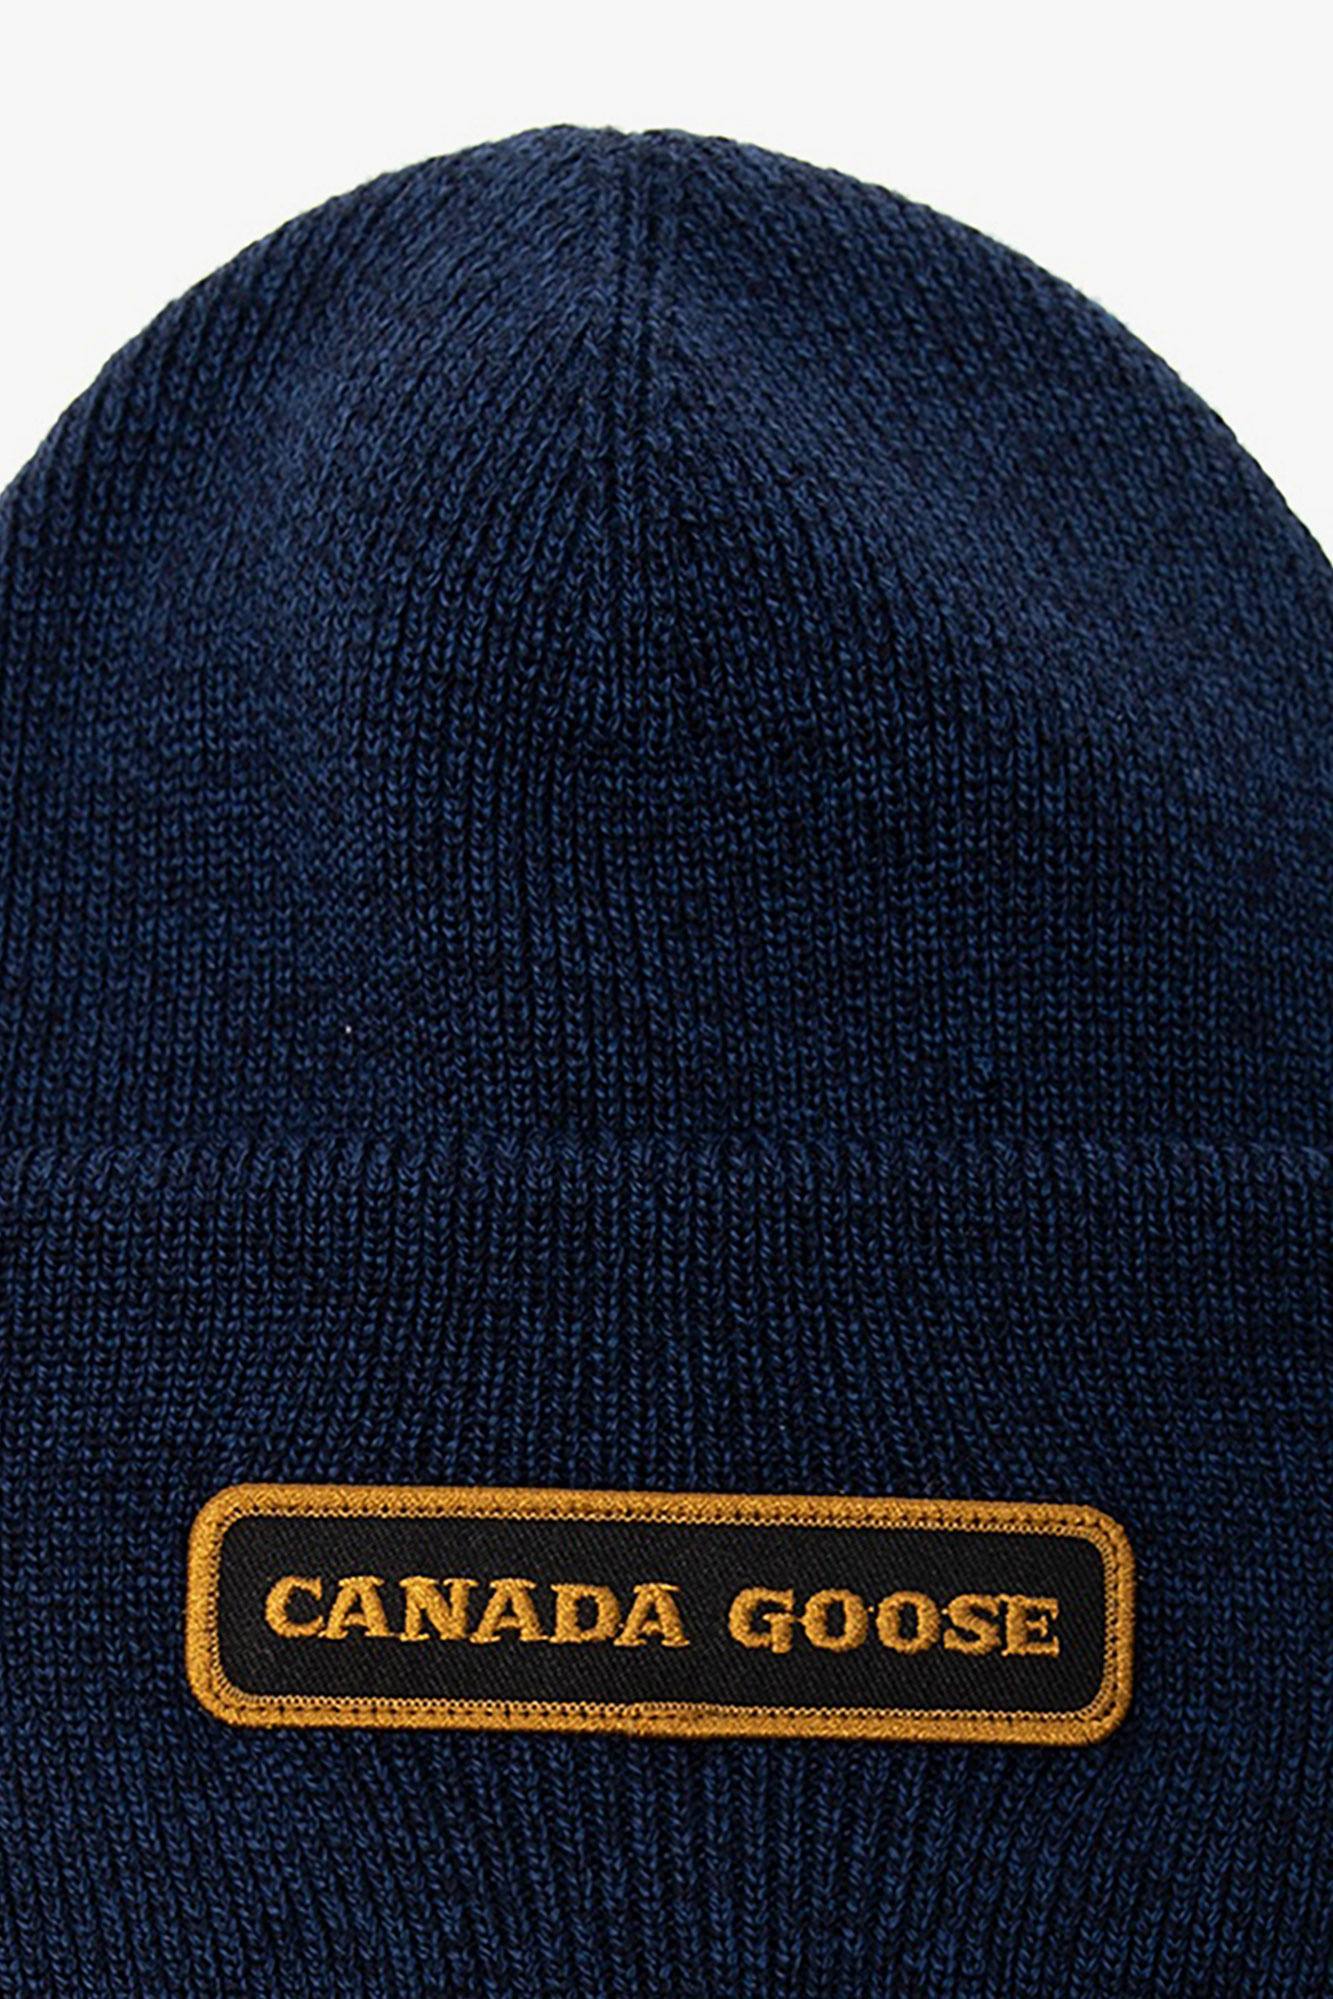 Navy blue Wool beanie with logo Canada Goose - Vitkac Canada